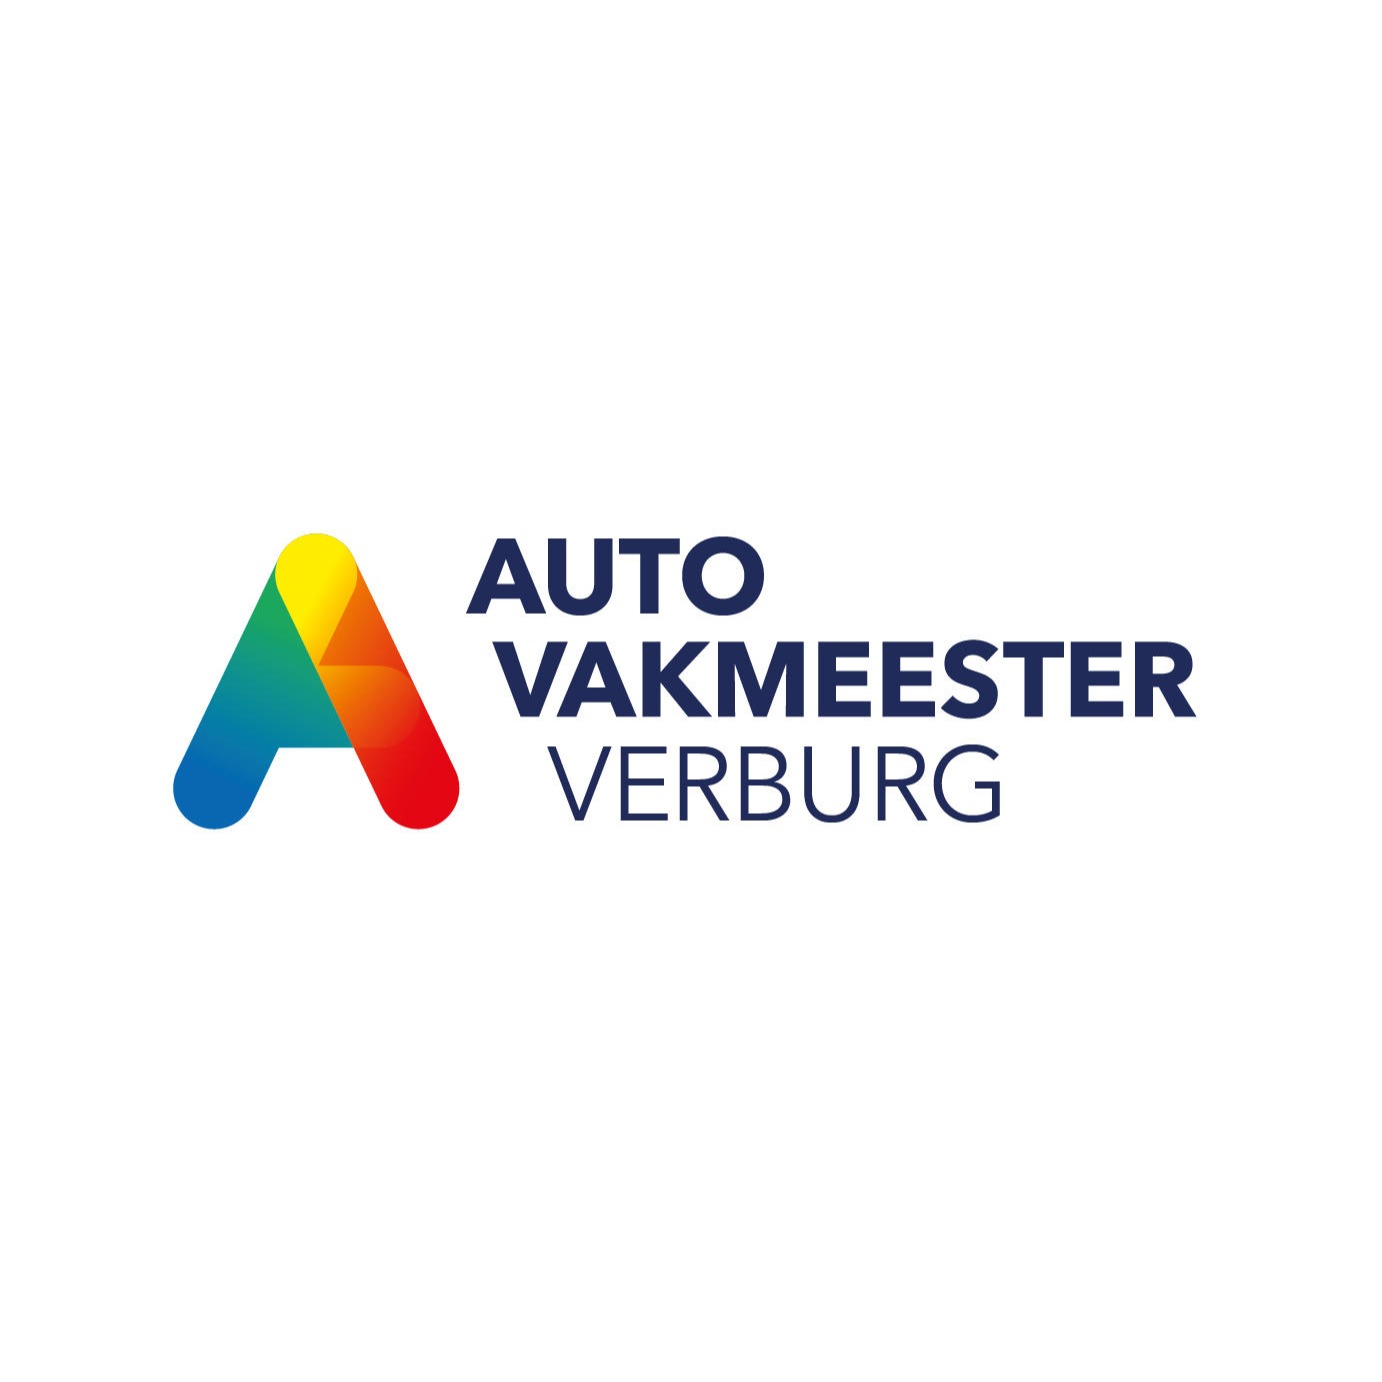 Autovakmeester Verburg Logo